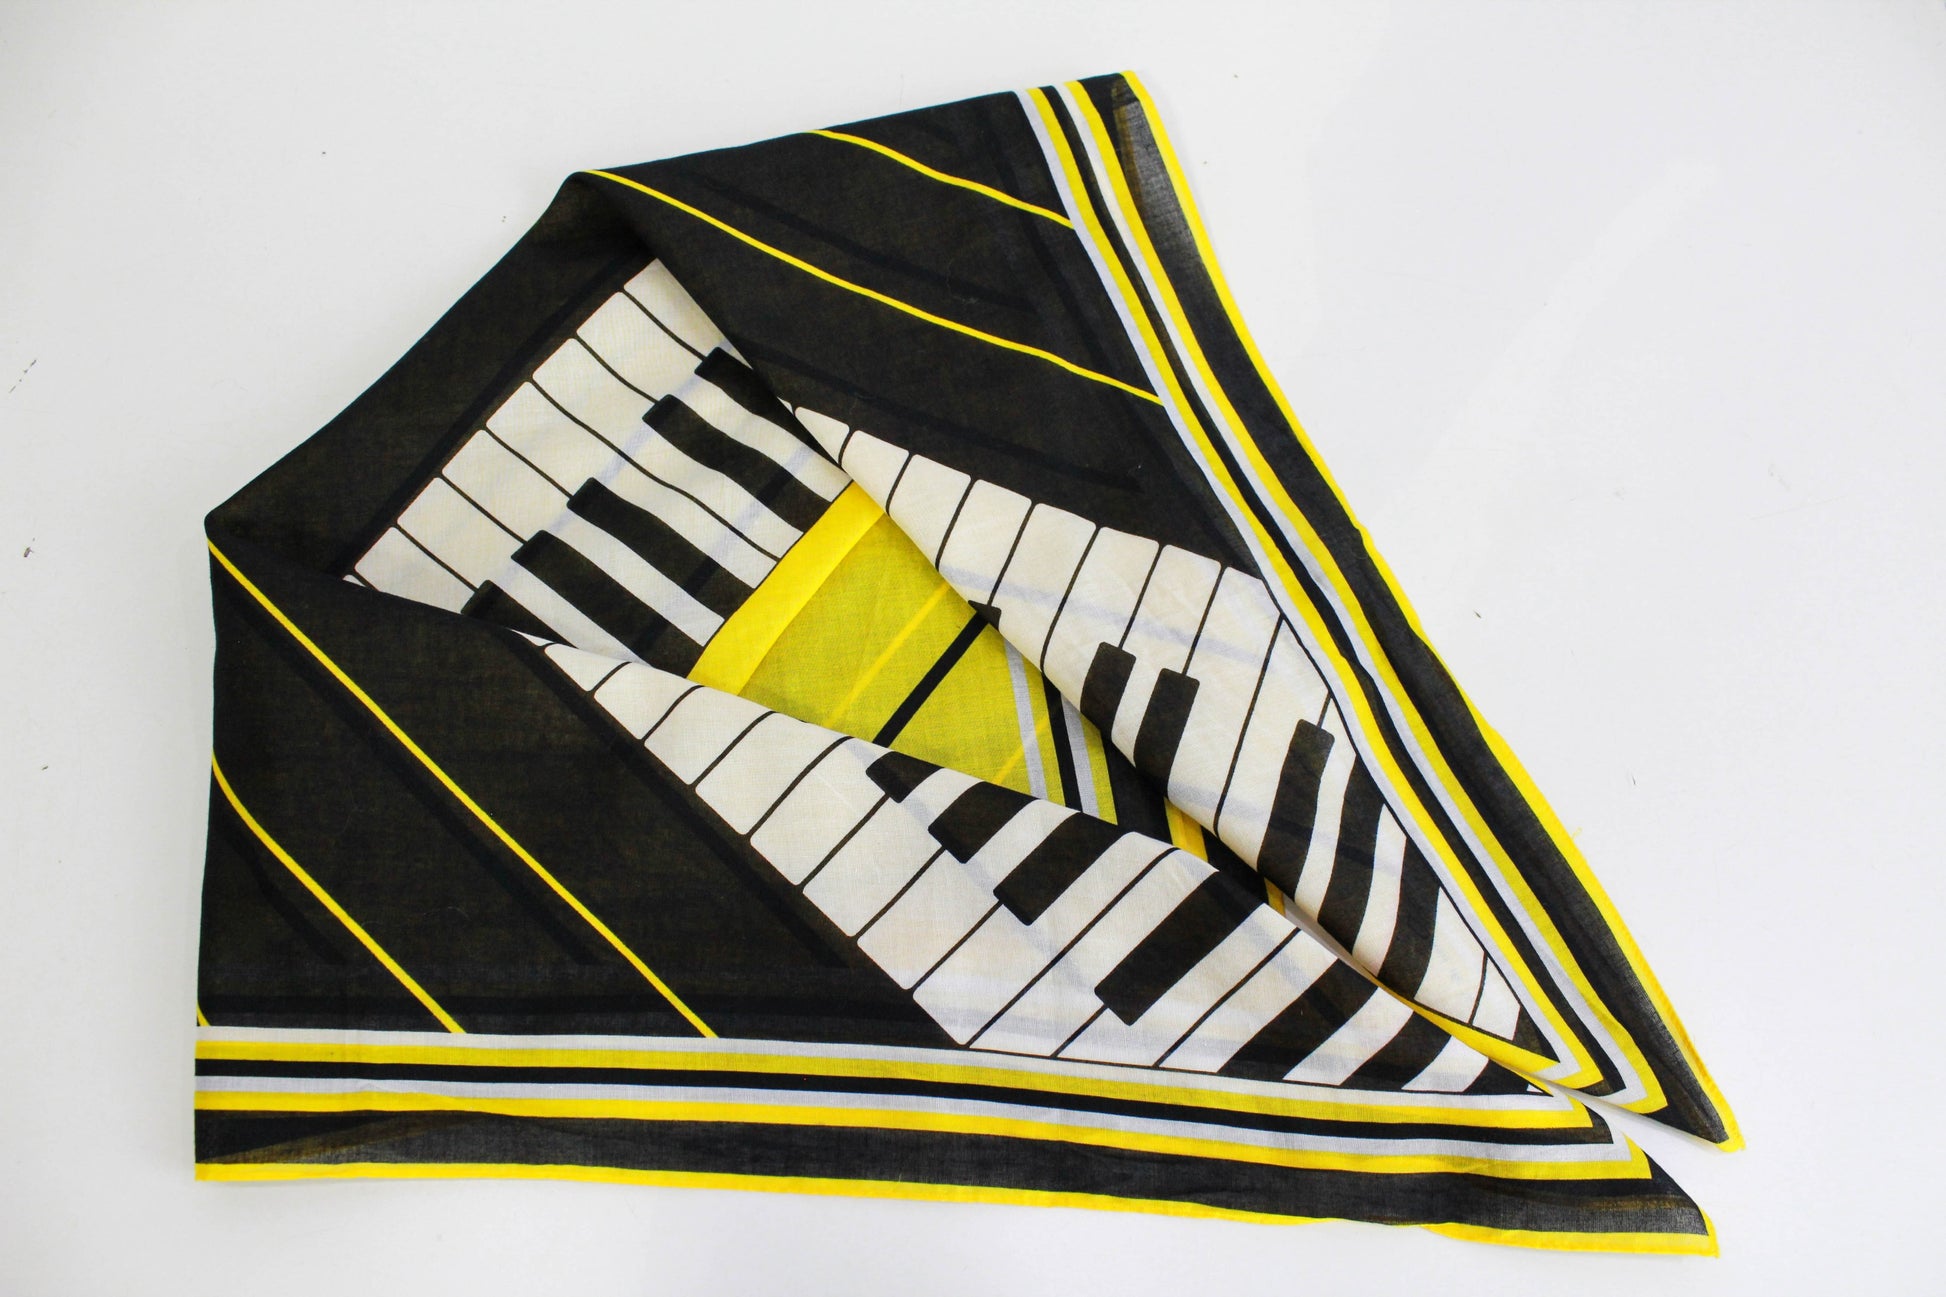 Oscar de la renta piano print square scarf, yellow and black